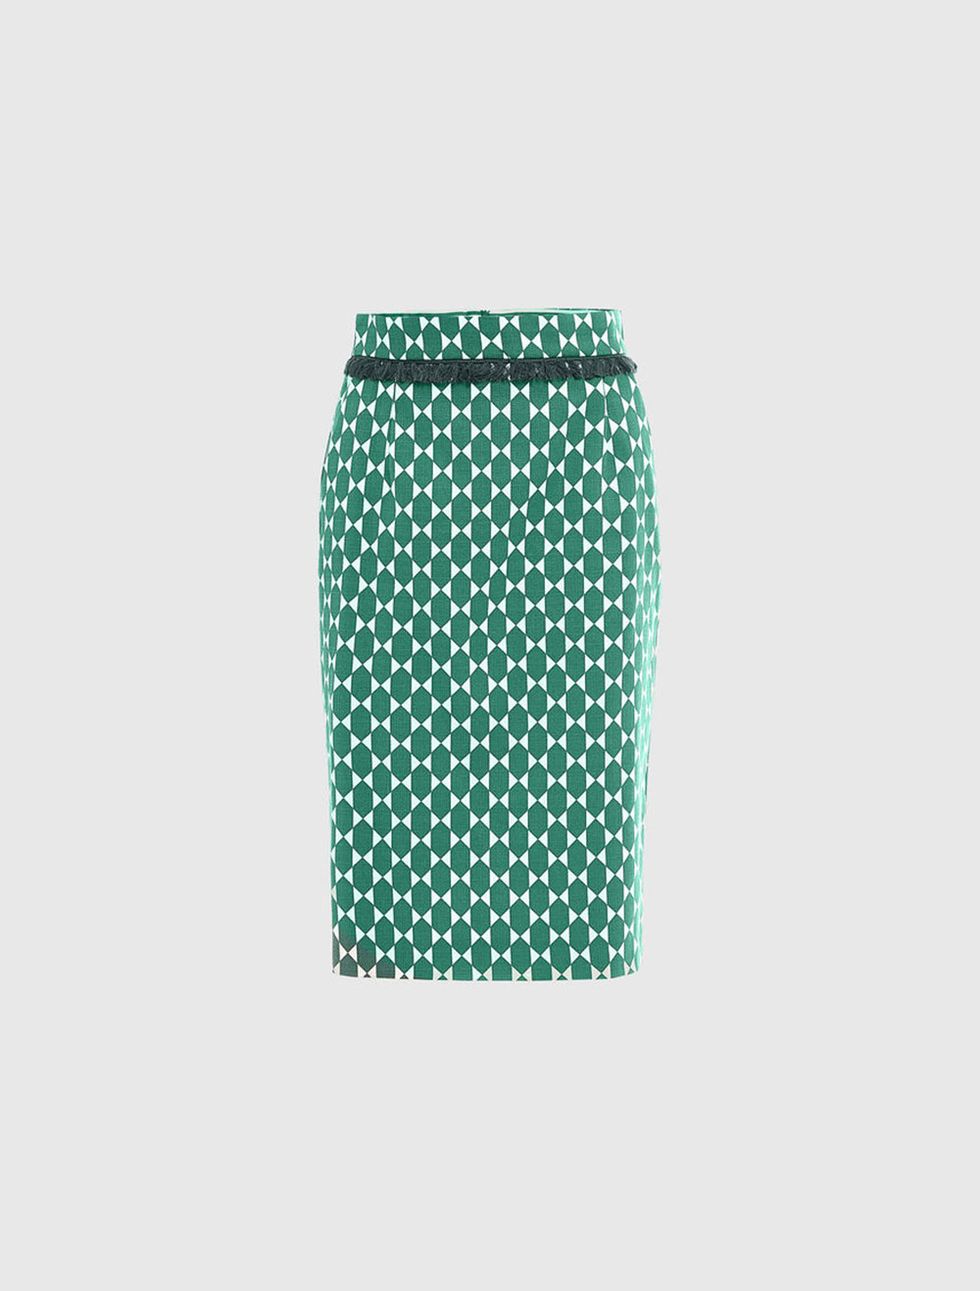 Pencil skirt, Aqua, Turquoise, Green, Pattern, Teal, Design, Turquoise, Polka dot, Shorts, 